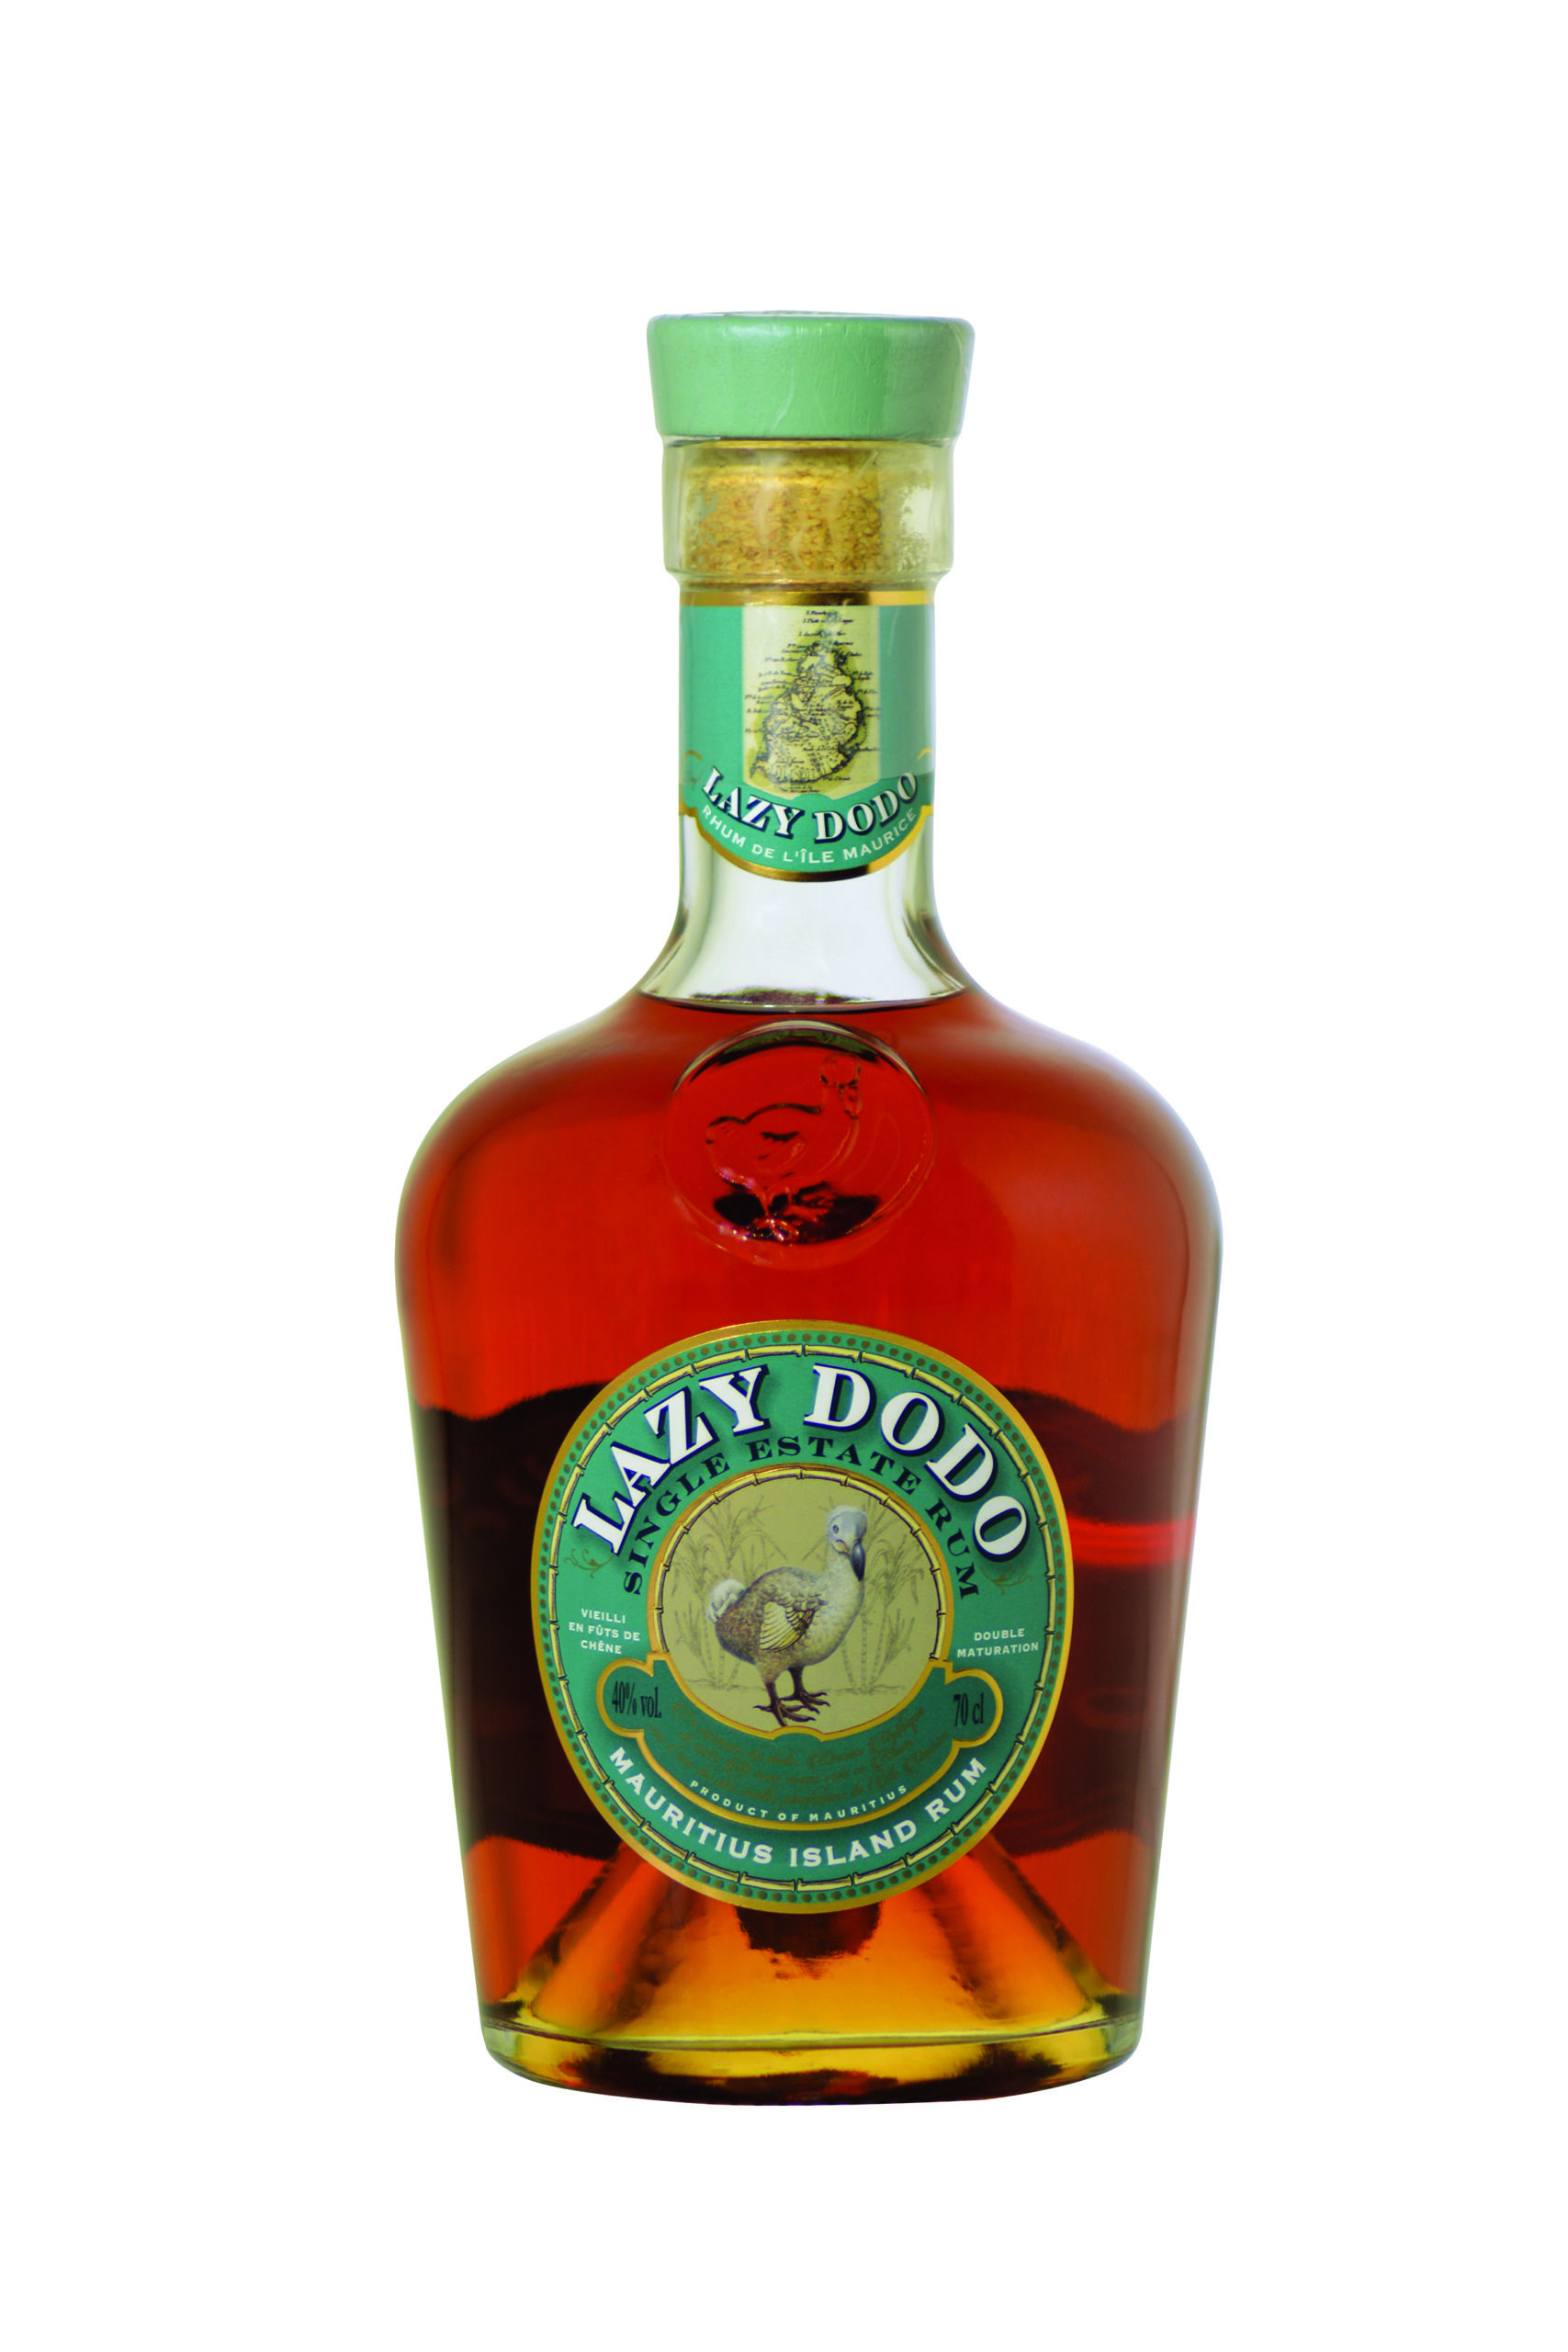 LAZY DODO - Single Estate Rum